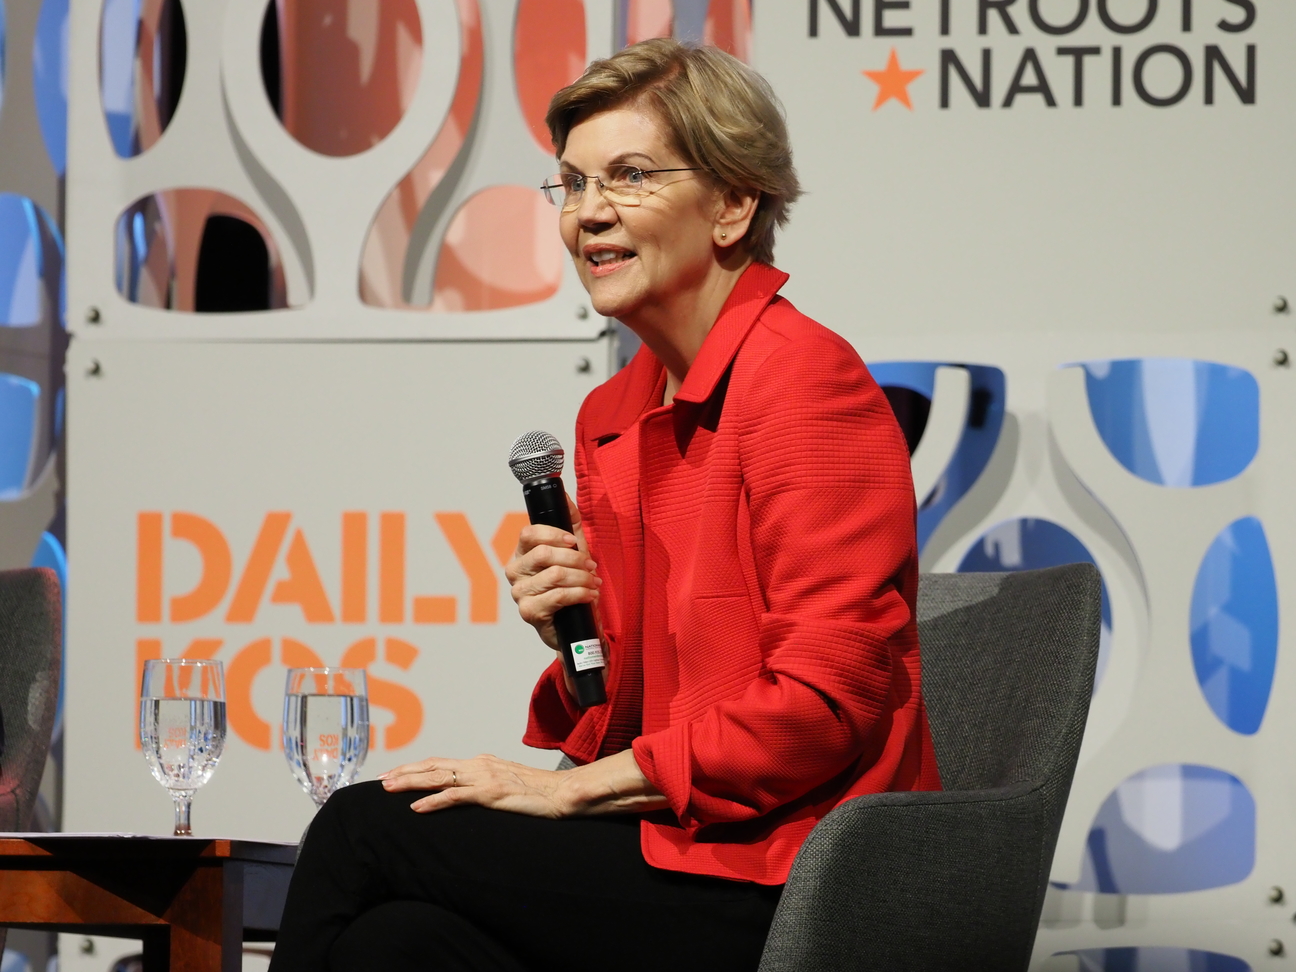 Senator Elizabeth Warren at Netroots Nation 2019